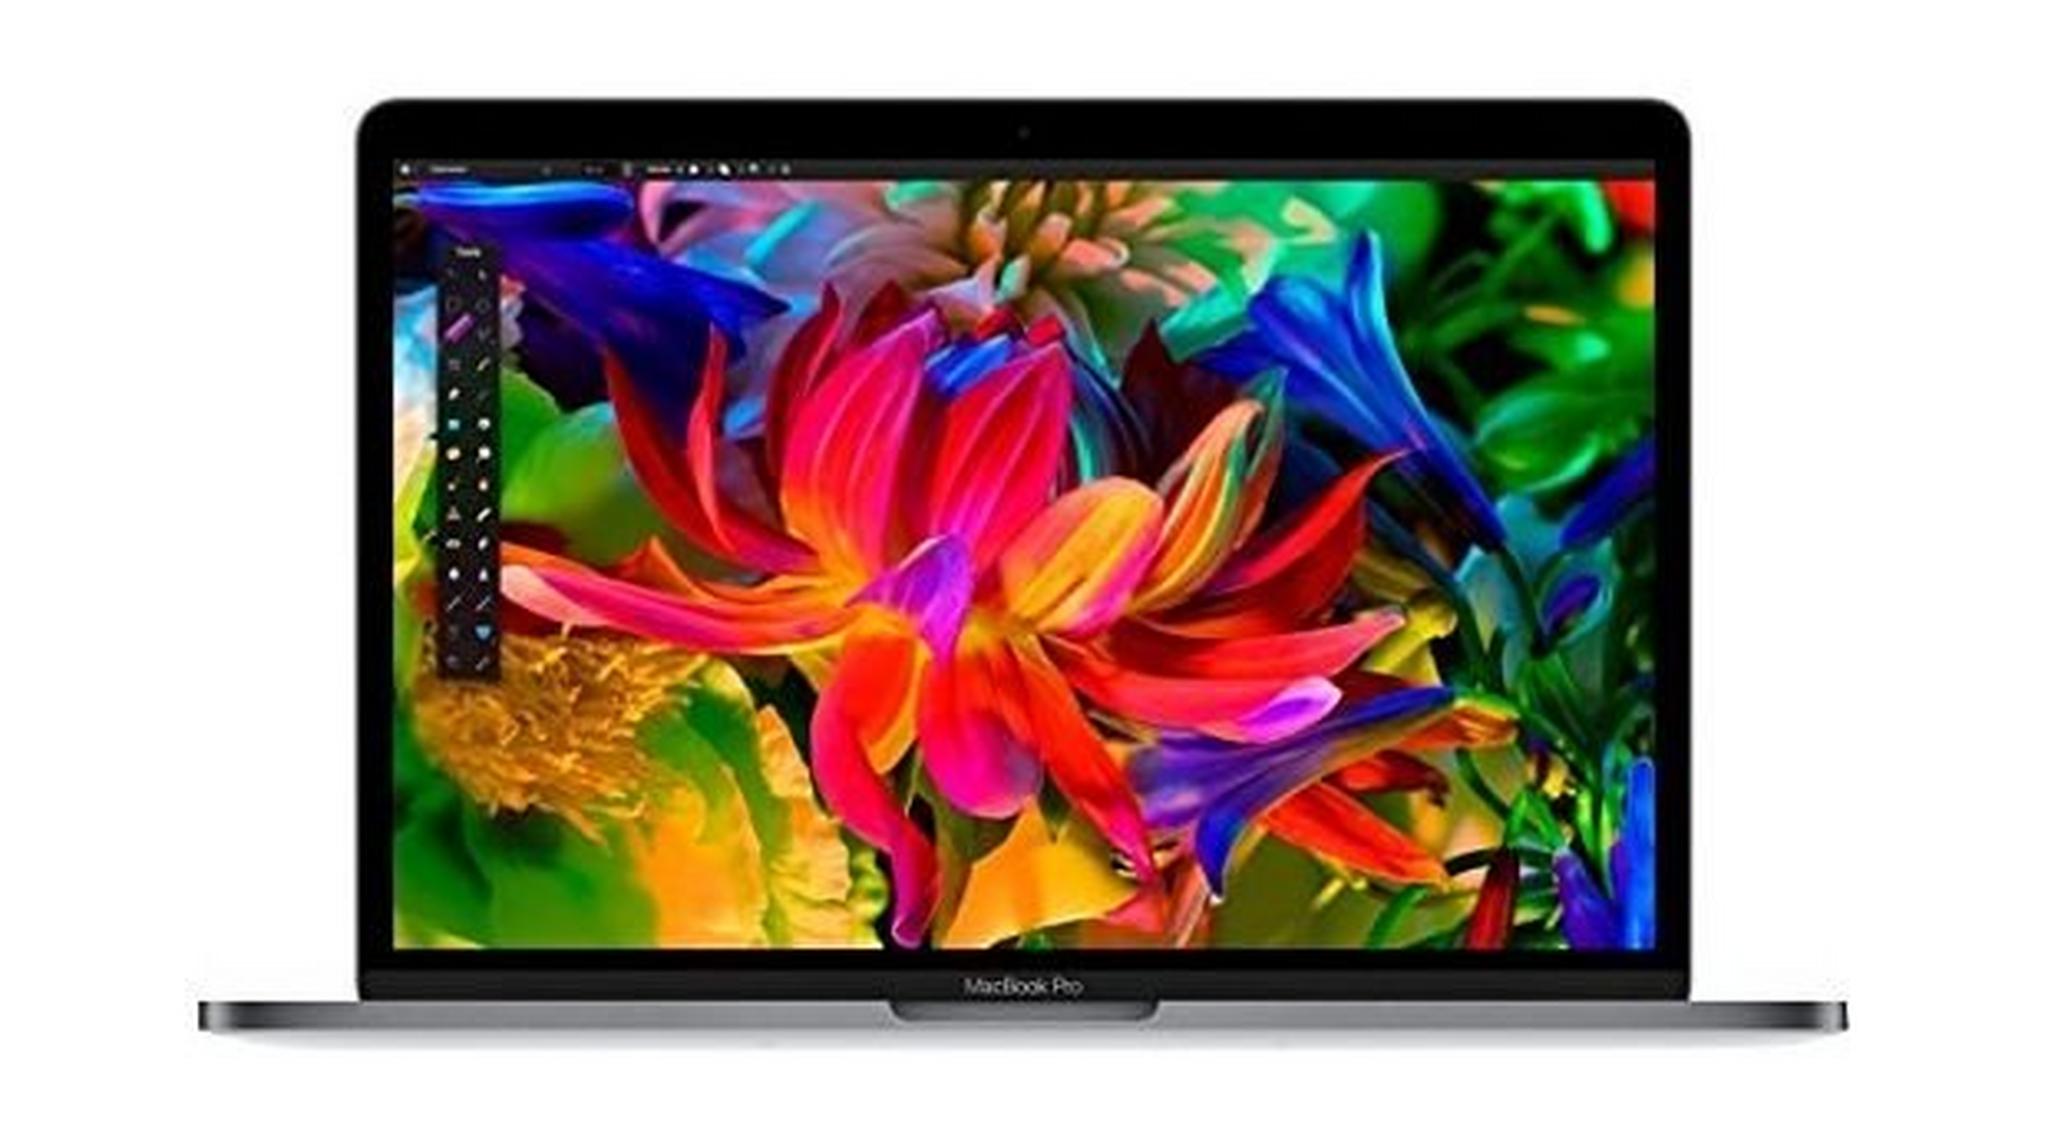 Apple MacBook Pro Intel Core i5 8GB RAM 128GB SSD 13-inch Laptop (MPXQ2AE/A) - Space Grey